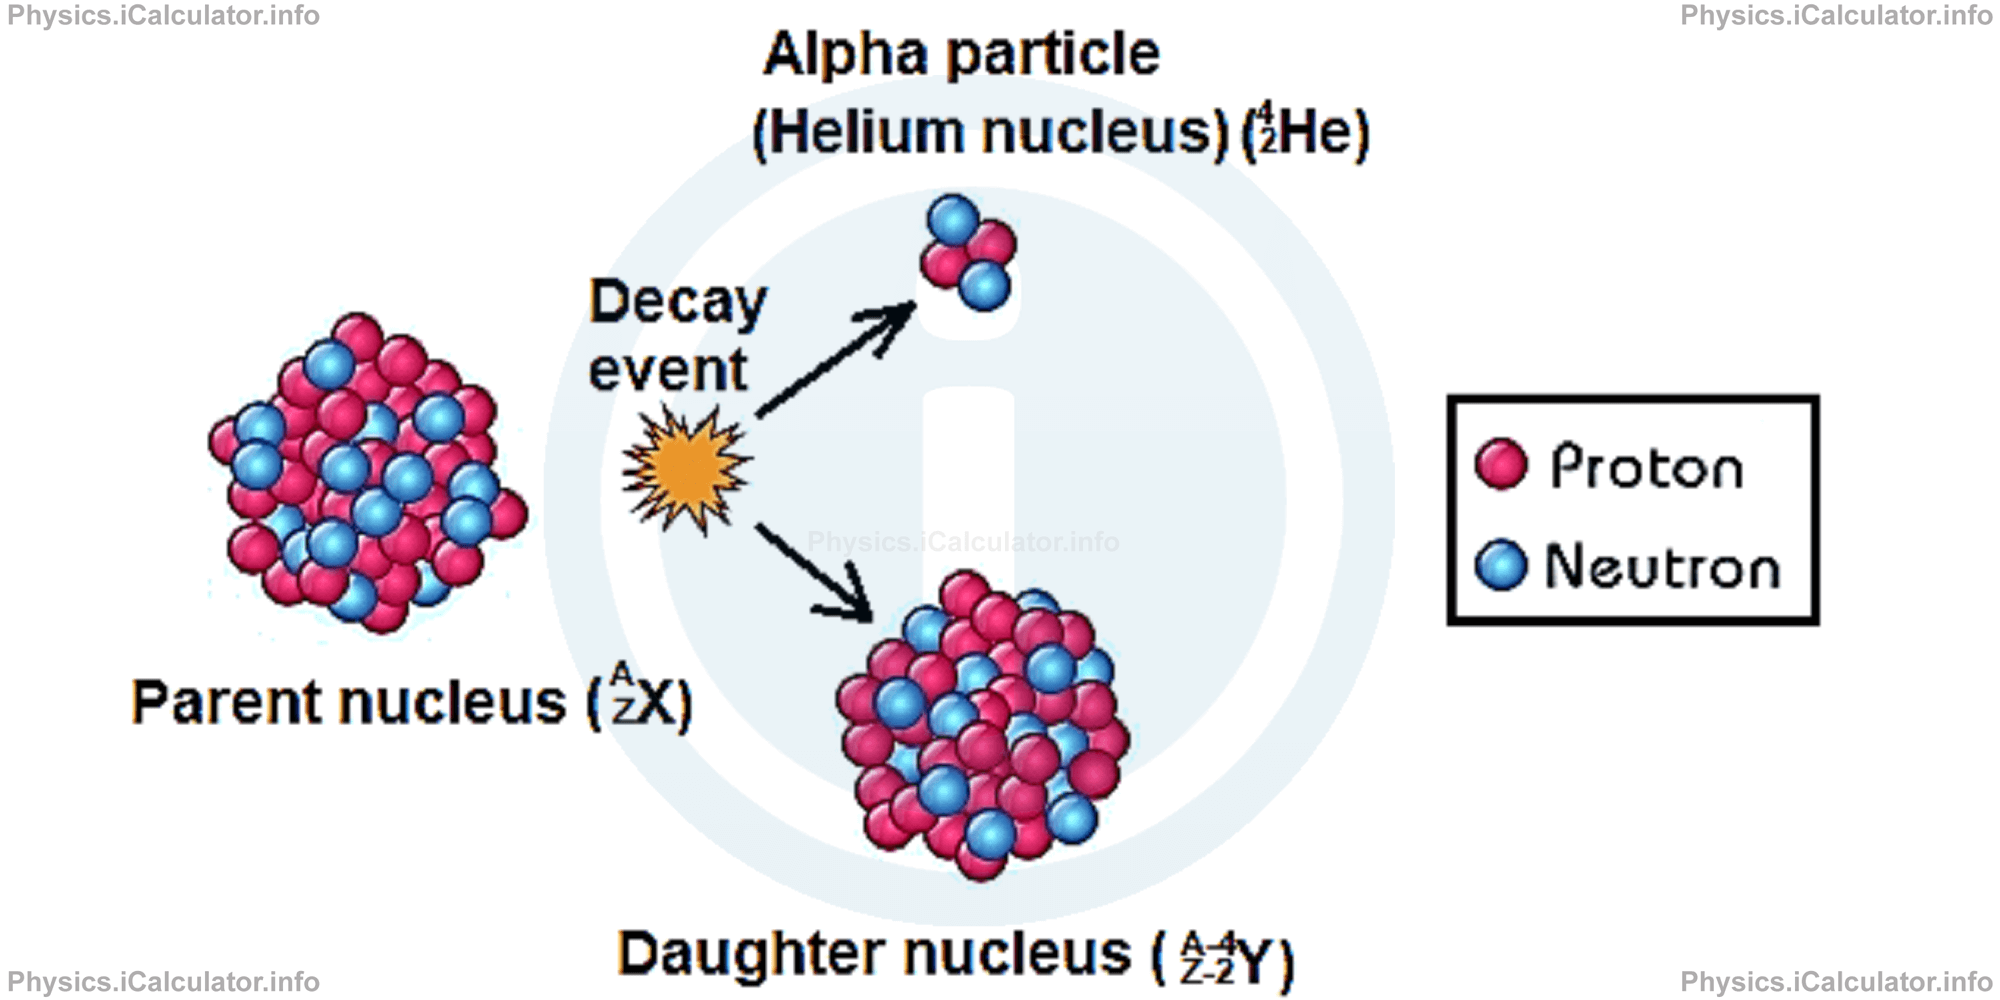 Physics Tutorials: This image provides visual information for the physics tutorial Radioactivity and Half-Life 